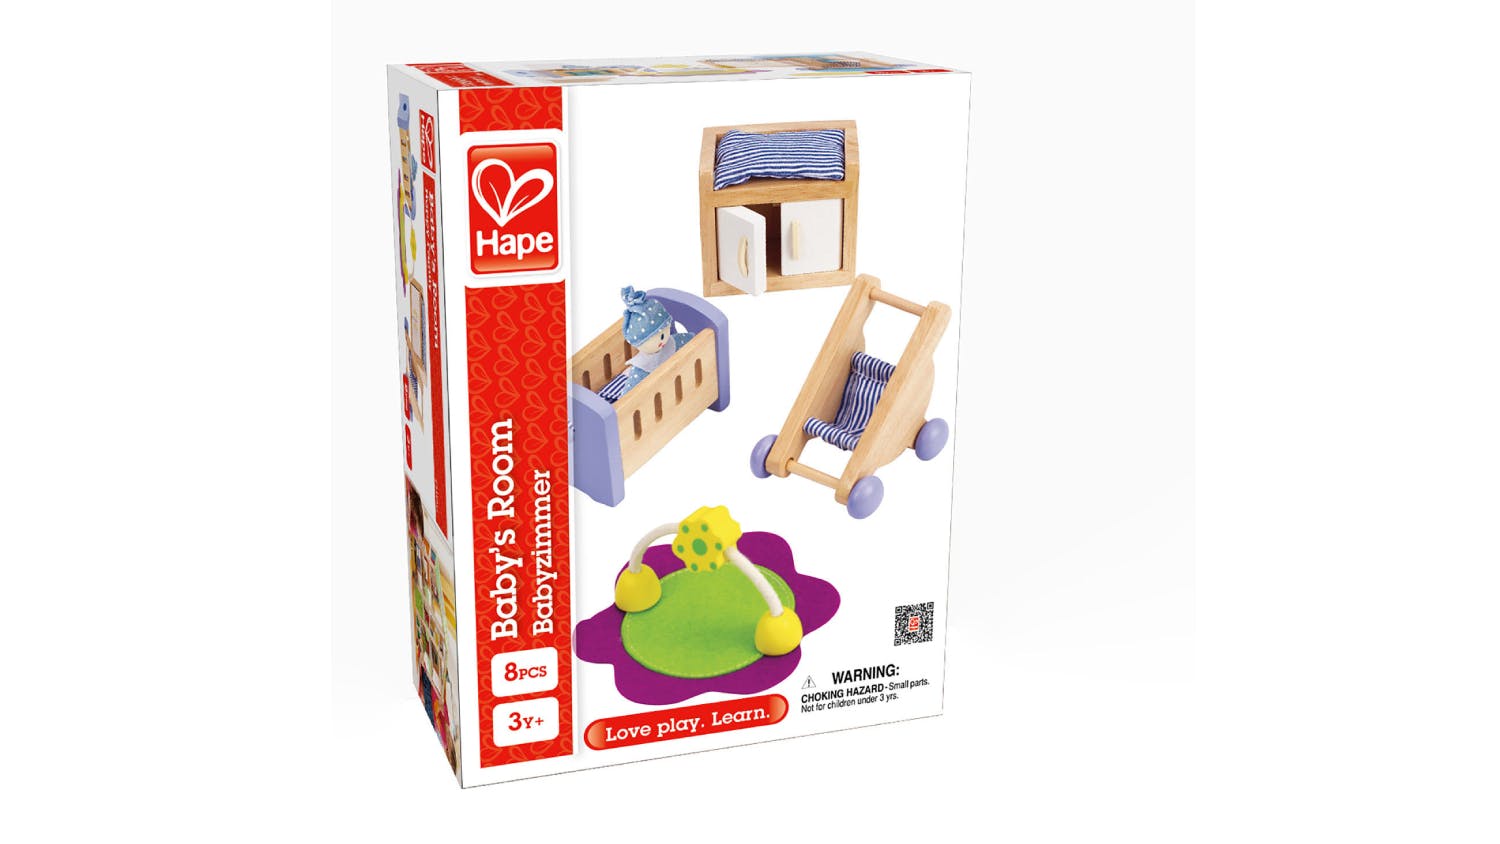 Hape "Happy Family" Wooden Doll Family Furniture Set - Nursery